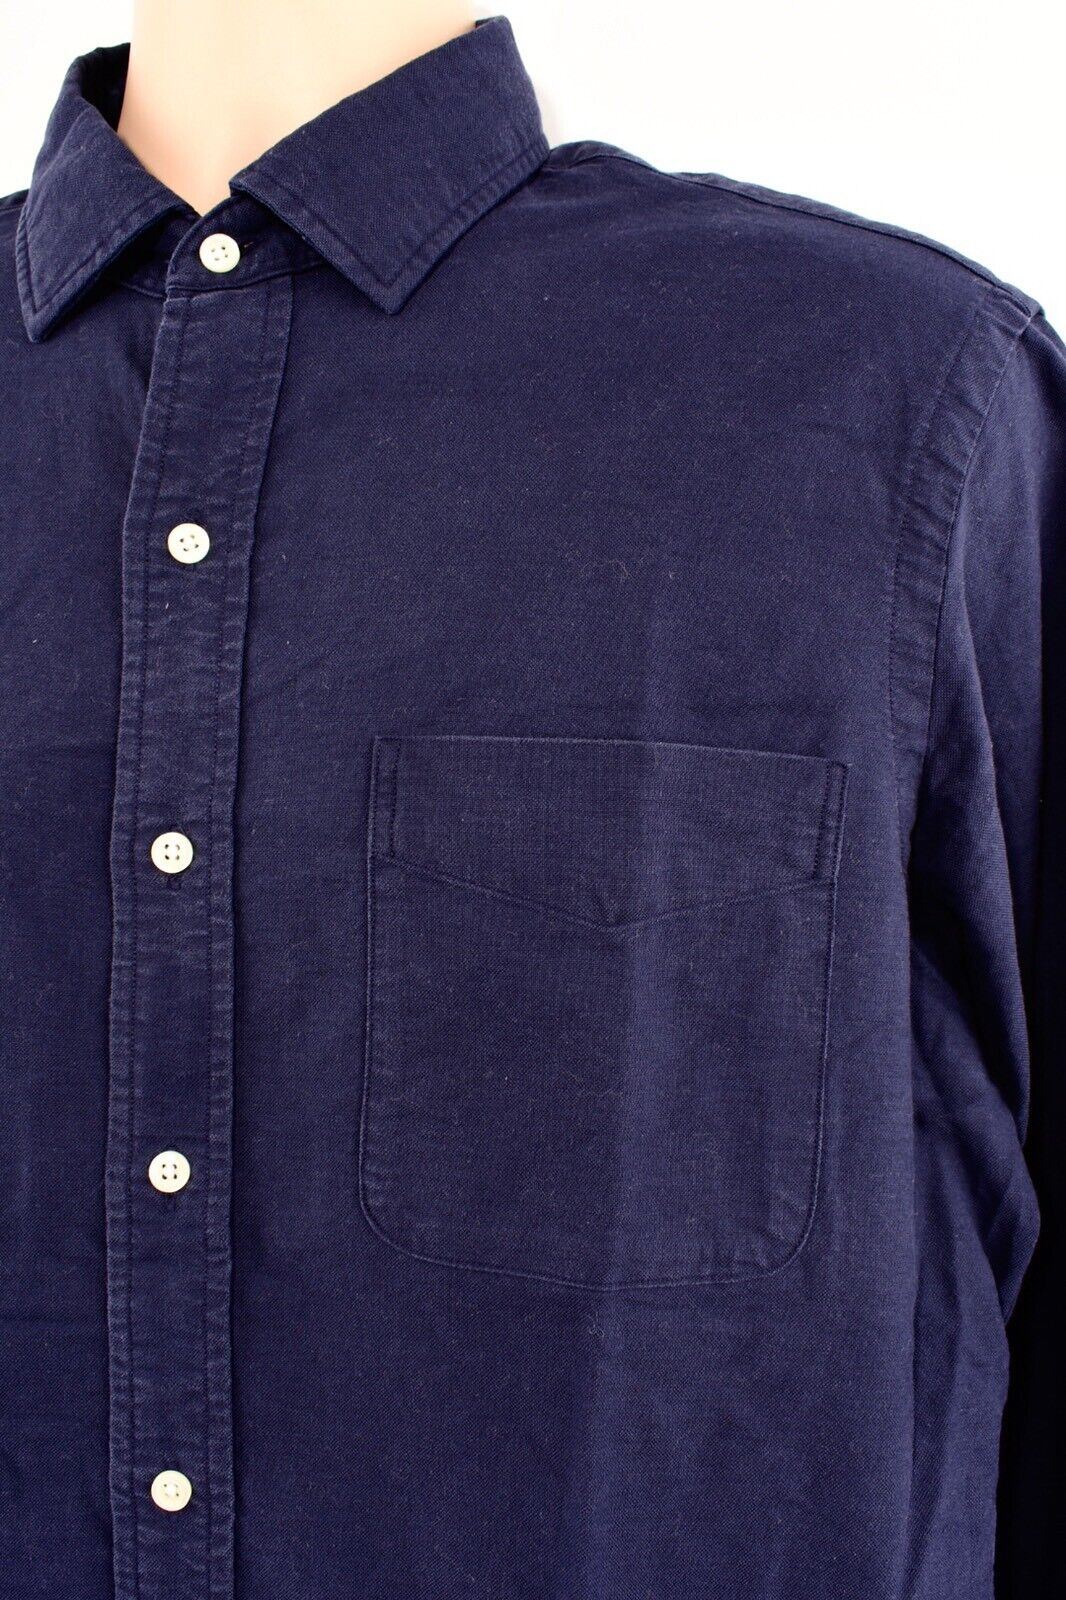 POLO RALPH LAUREN Men's Classic Fit Back Print Shirt, Navy Blue, size MEDIUM